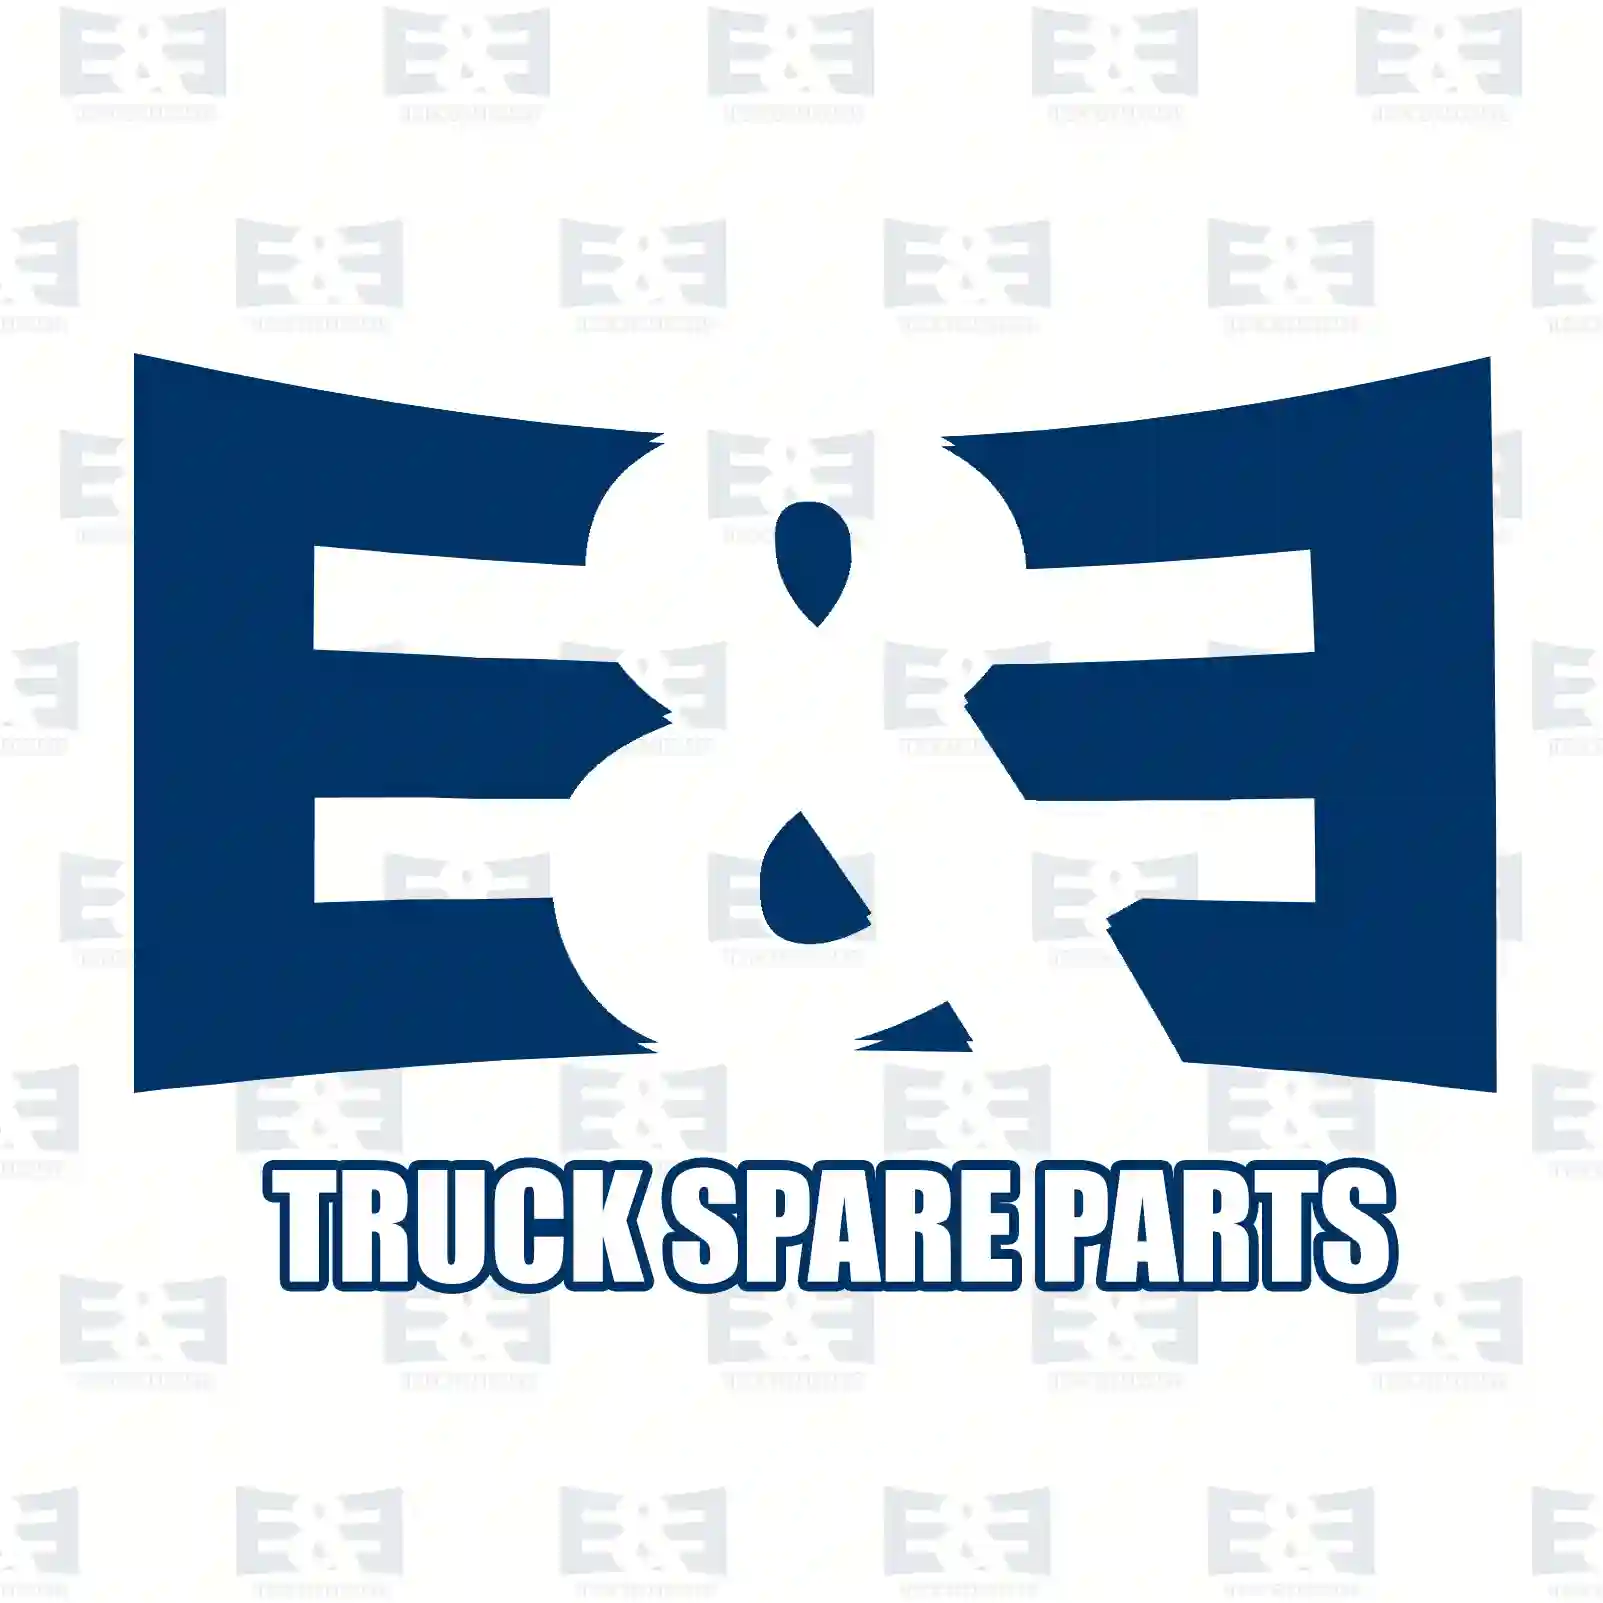 Ball joint, right hand thread, 2E2278074, 0009965045, 0009965545, 0009967545, 0019963045, 3849960145, 9412601489, ZG40145-0008 ||  2E2278074 E&E Truck Spare Parts | Truck Spare Parts, Auotomotive Spare Parts Ball joint, right hand thread, 2E2278074, 0009965045, 0009965545, 0009967545, 0019963045, 3849960145, 9412601489, ZG40145-0008 ||  2E2278074 E&E Truck Spare Parts | Truck Spare Parts, Auotomotive Spare Parts